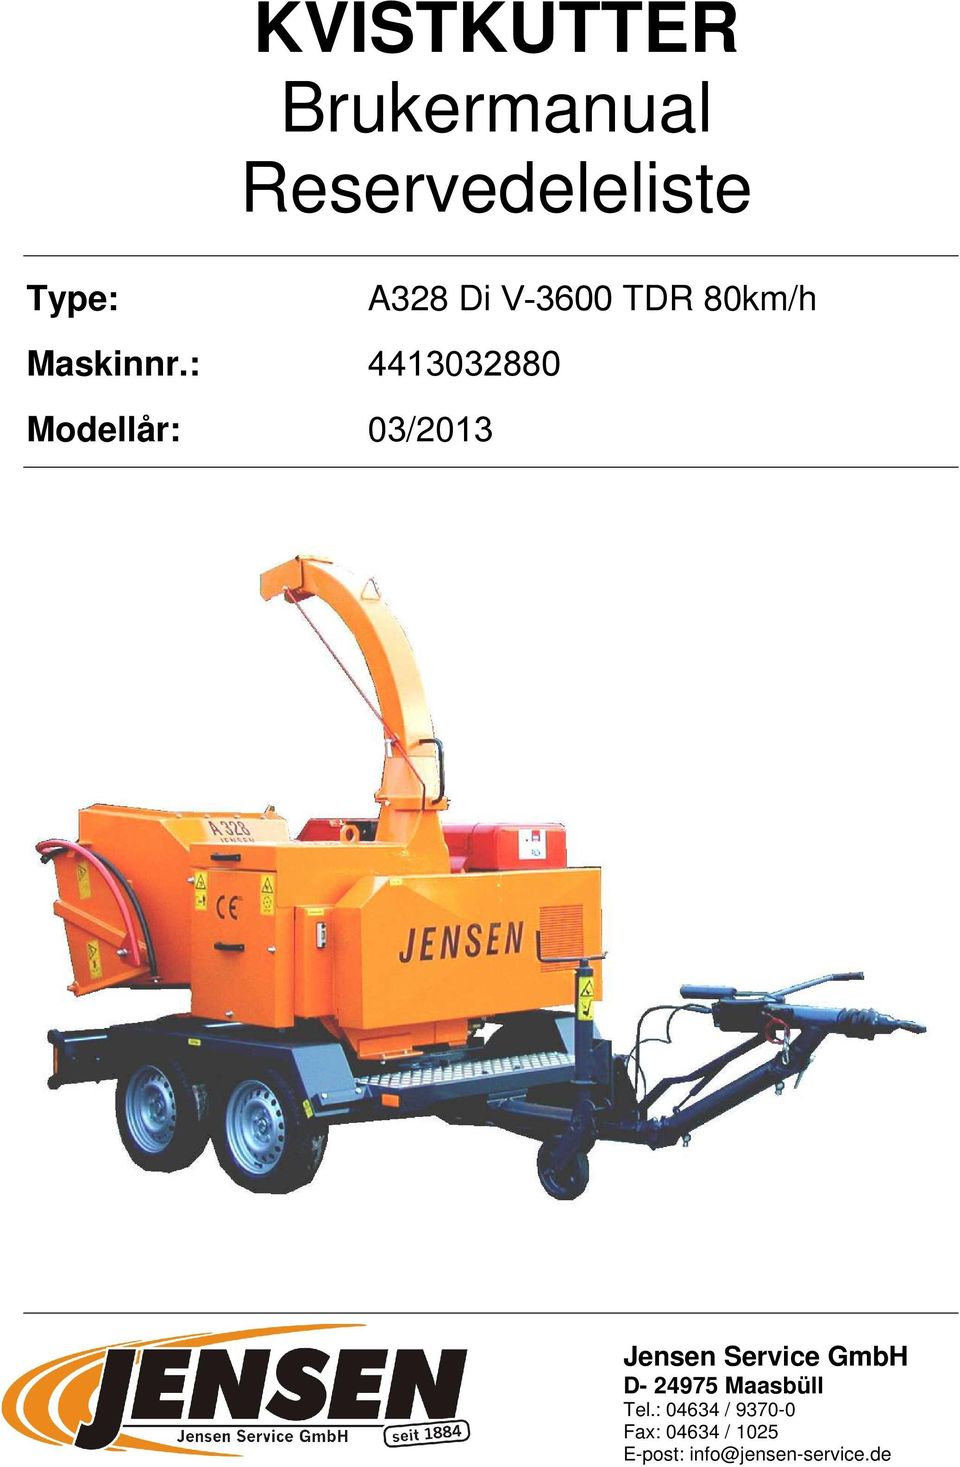 : 4413032880 Modellår: 03/2013 Jensen Service GmbH D-